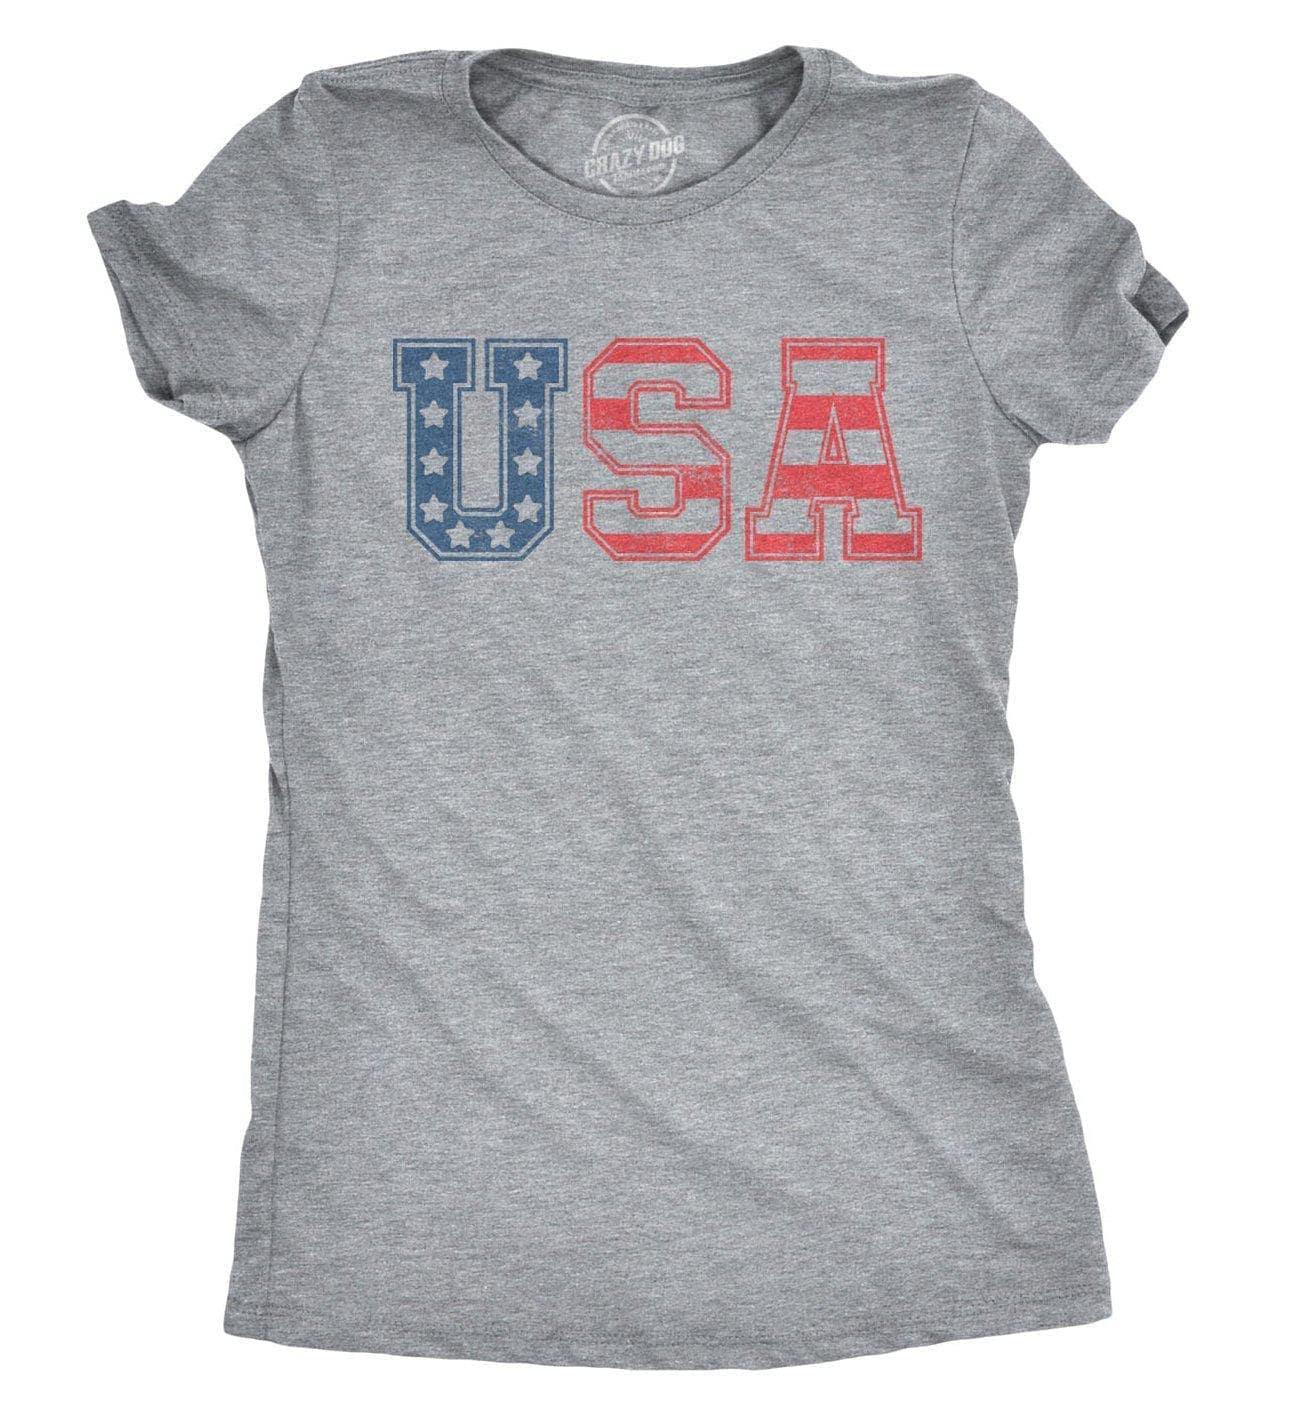 USA Women's Tshirt - Crazy Dog T-Shirts